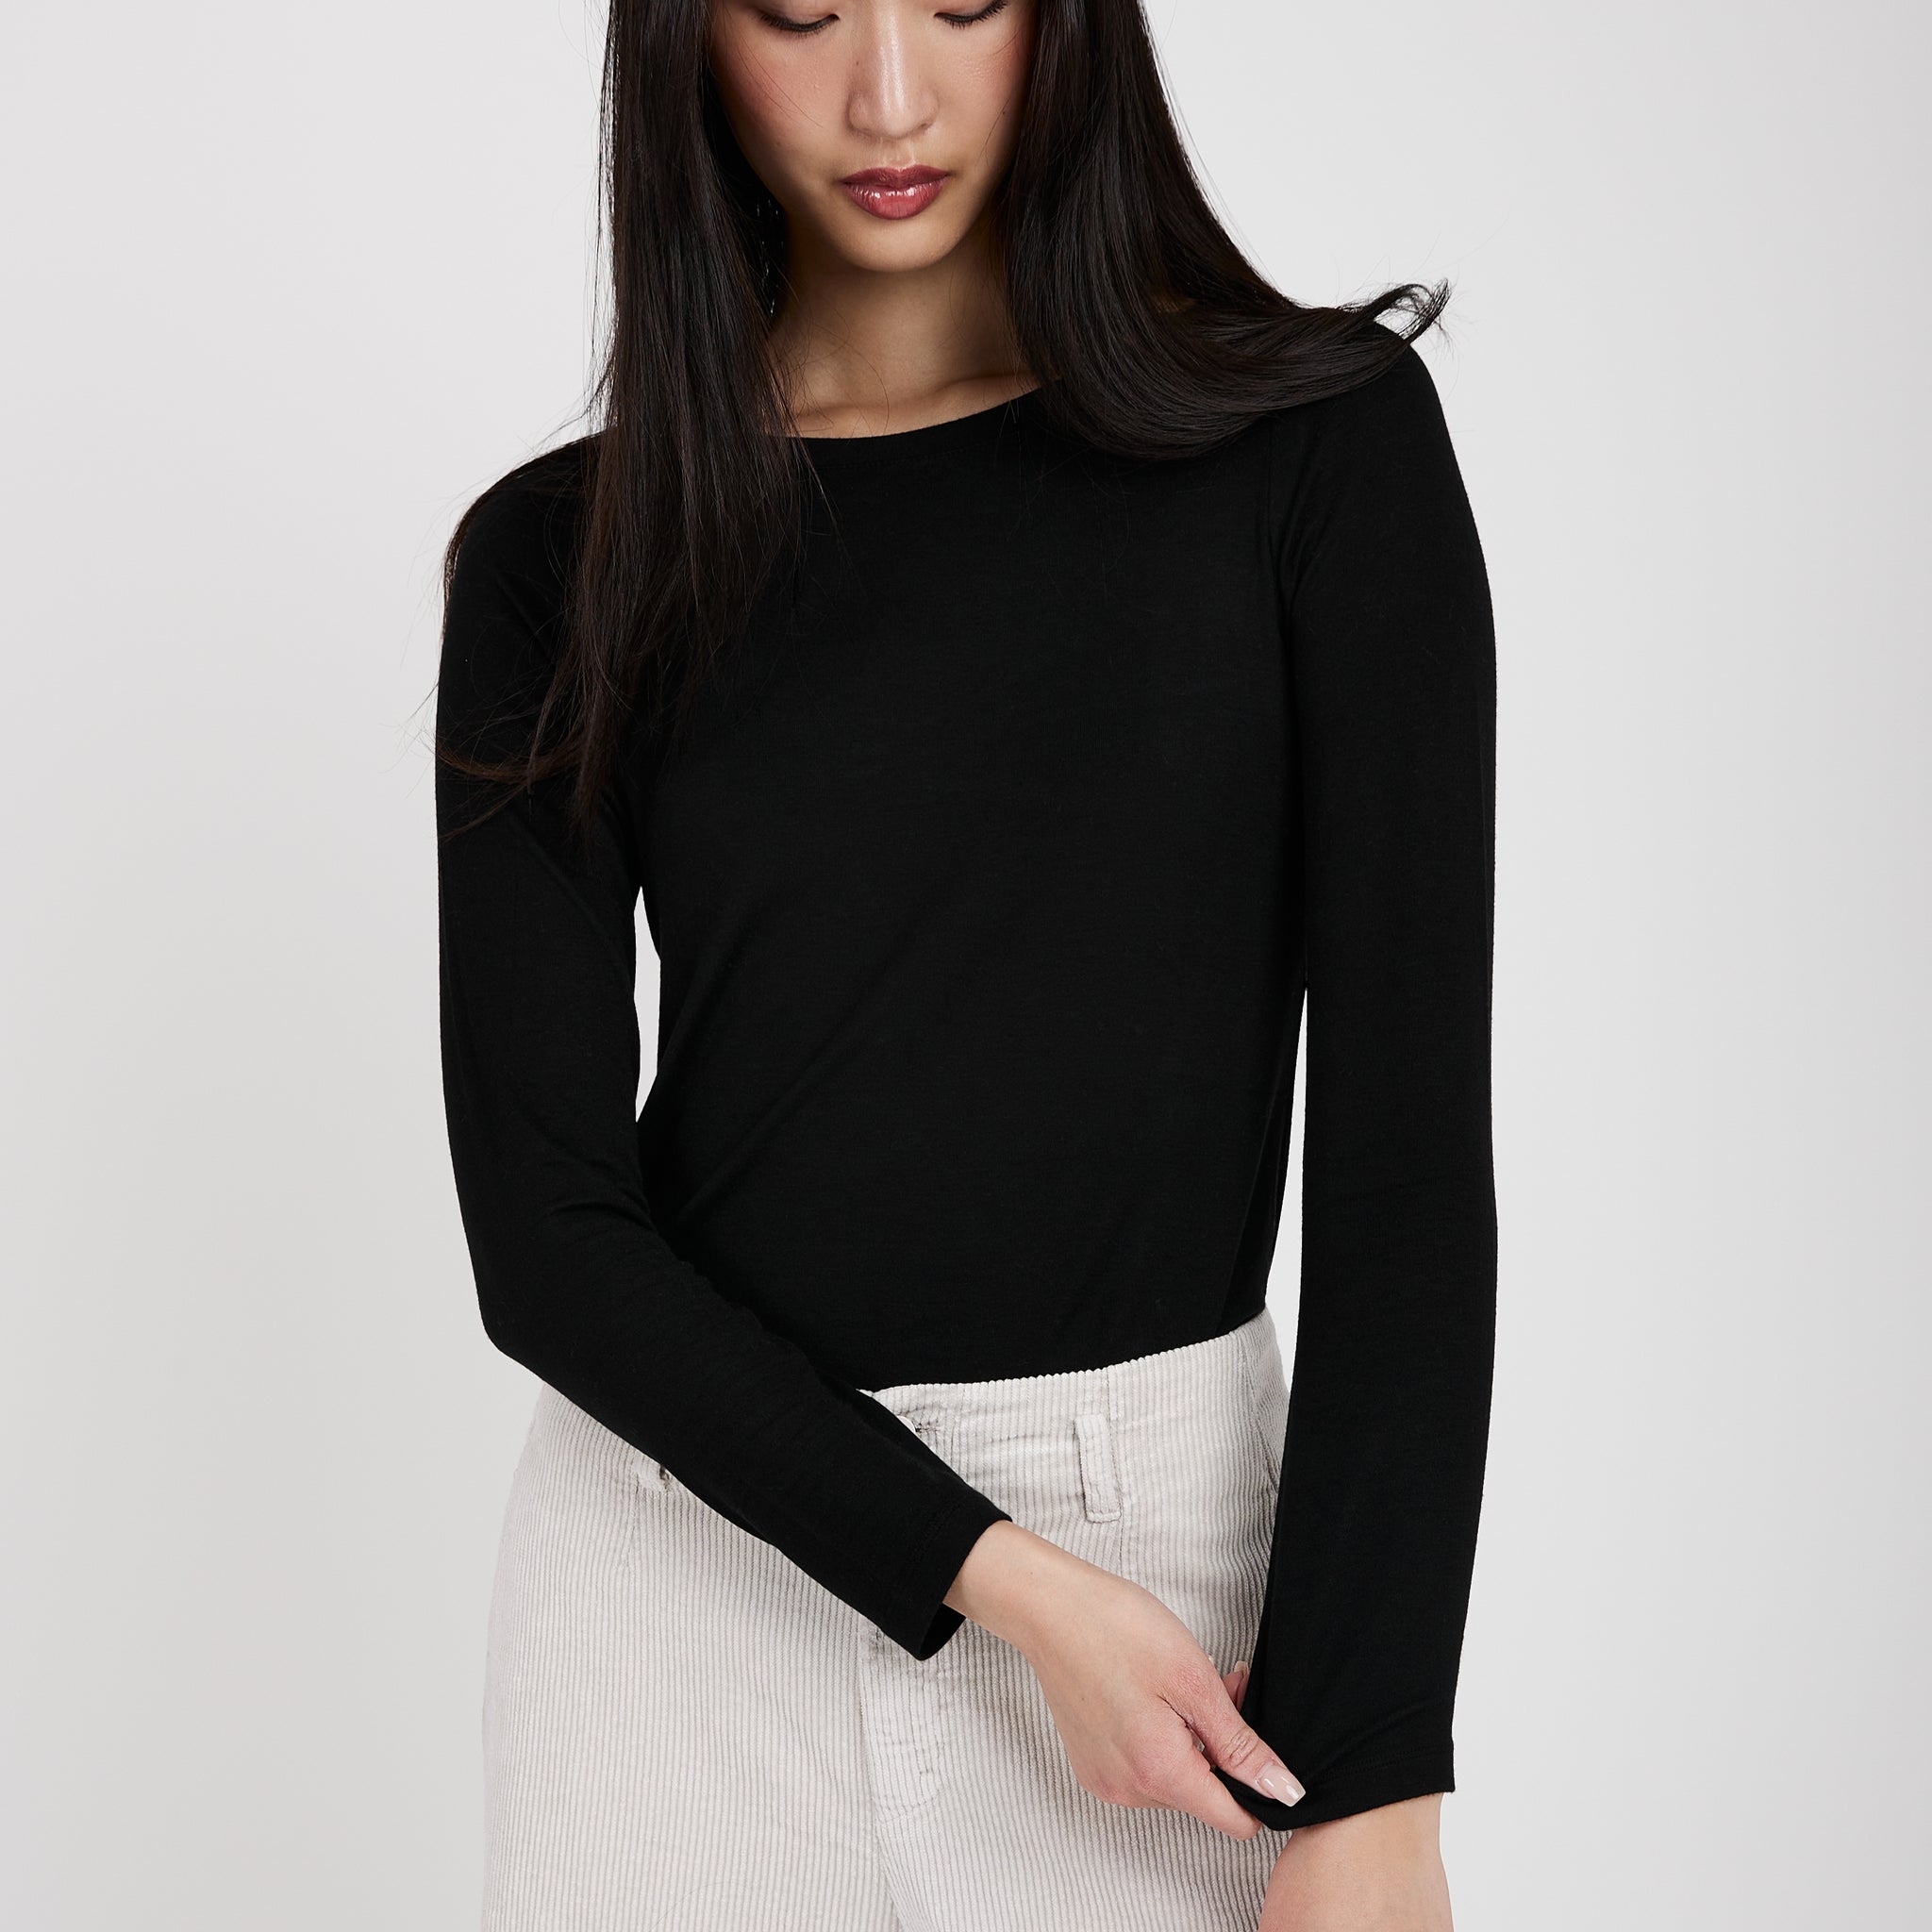 TRANSIT Long Sleeve Modal T-Shirt Top in Black